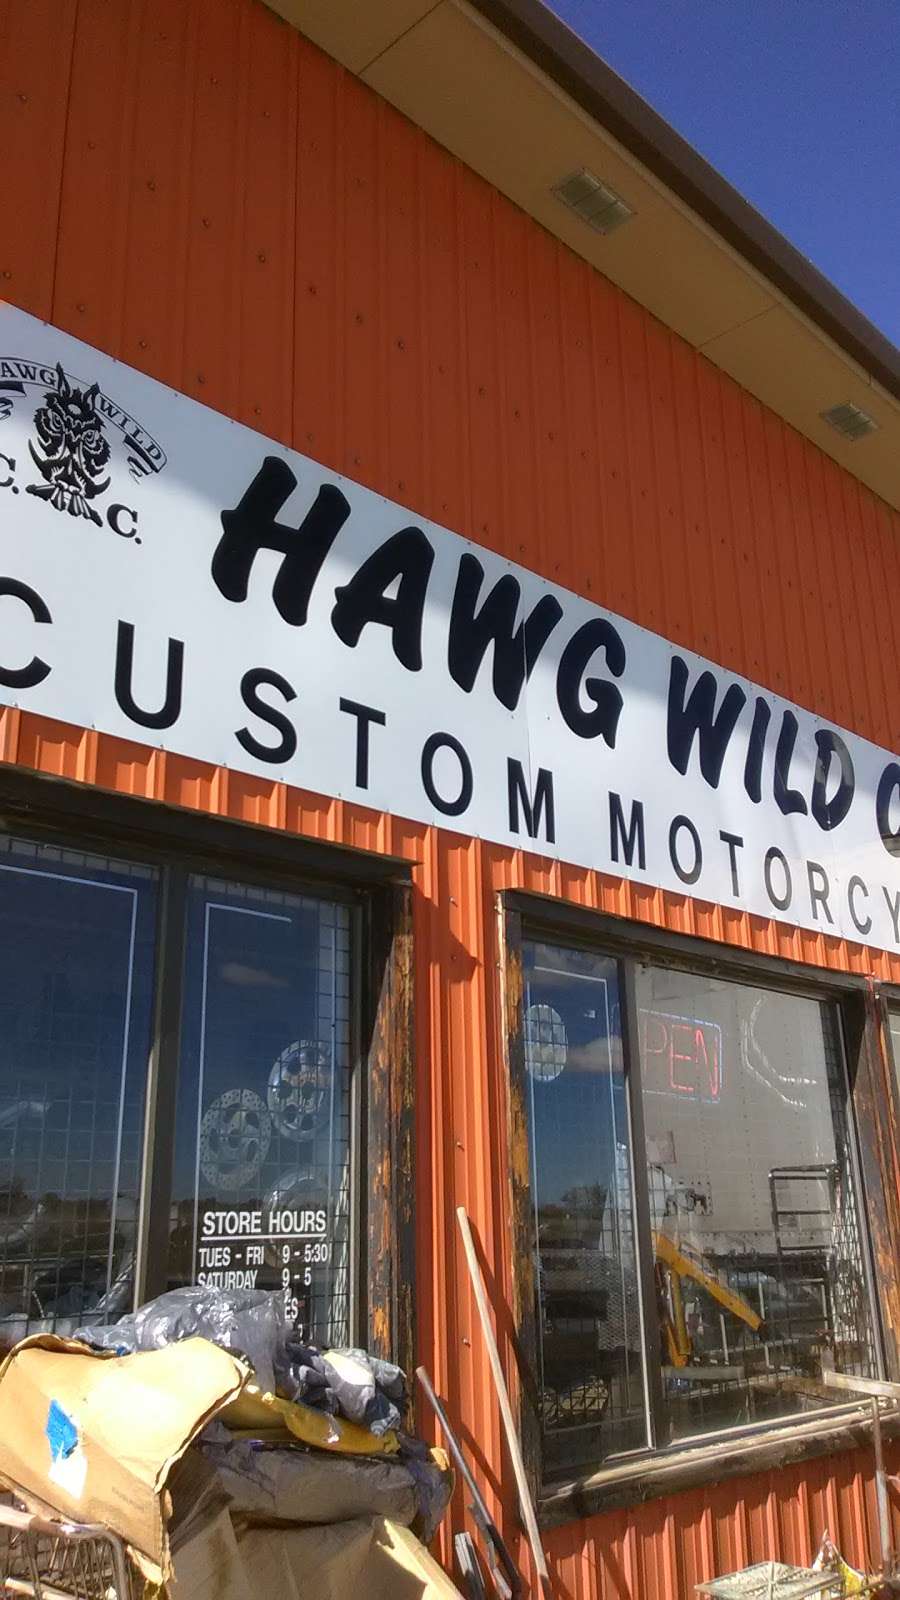 Hawg Wild Custom Choppers | 4315 S Lincoln Ave, Loveland, CO 80537, USA | Phone: (970) 669-5589